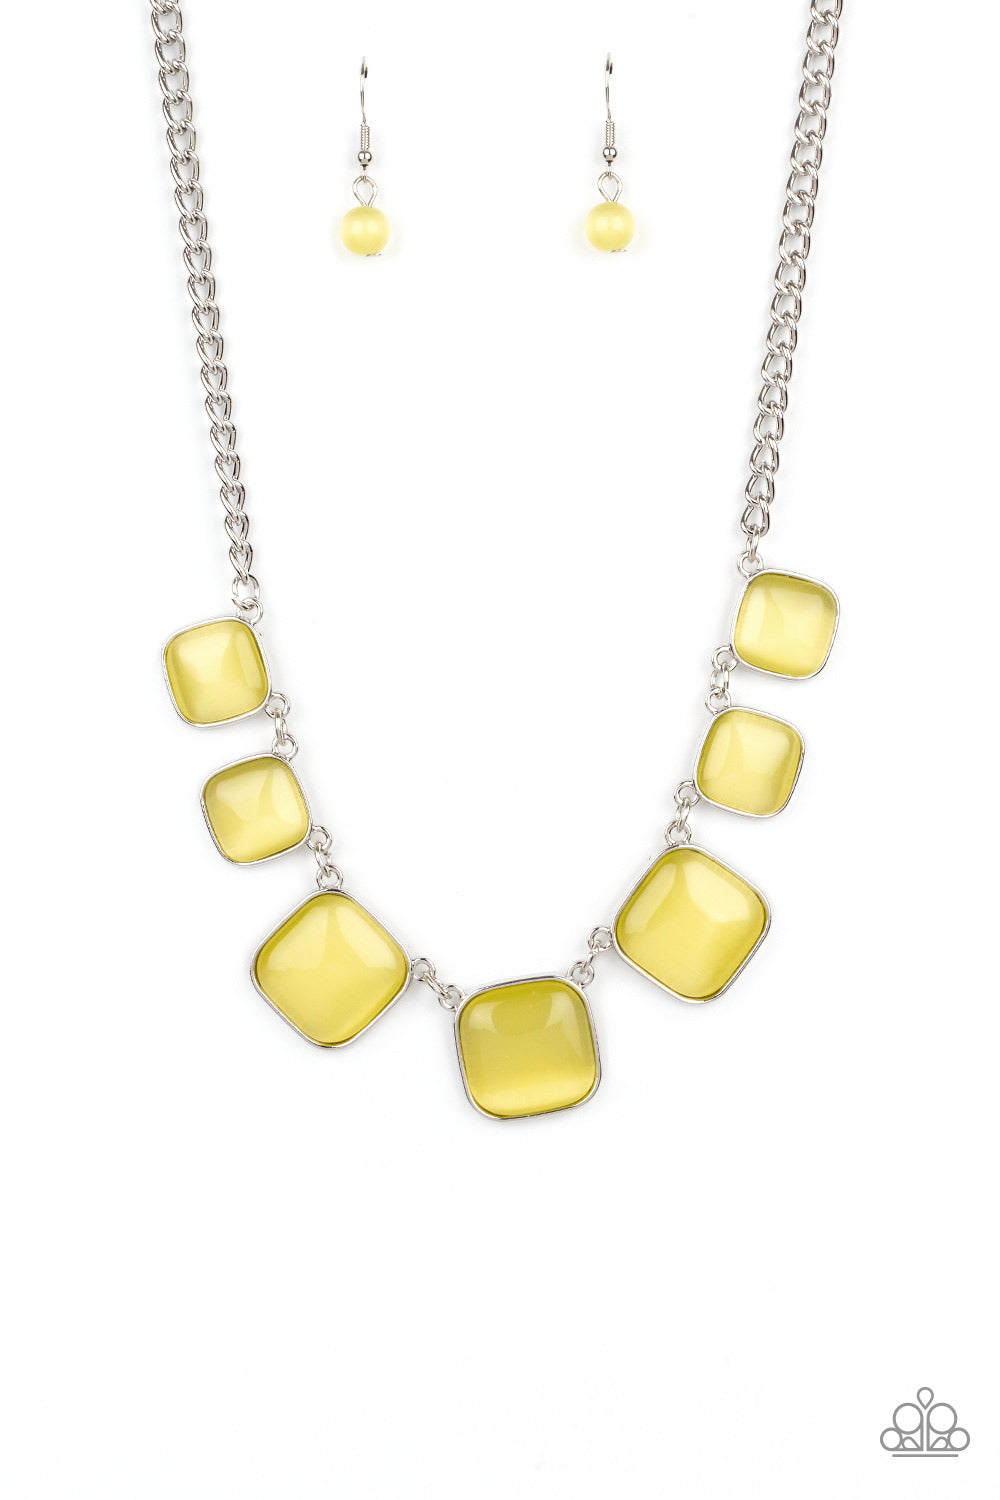 Aura Allure - Yellow Necklace - Paparazzi - Dare2bdazzlin N Jewelry